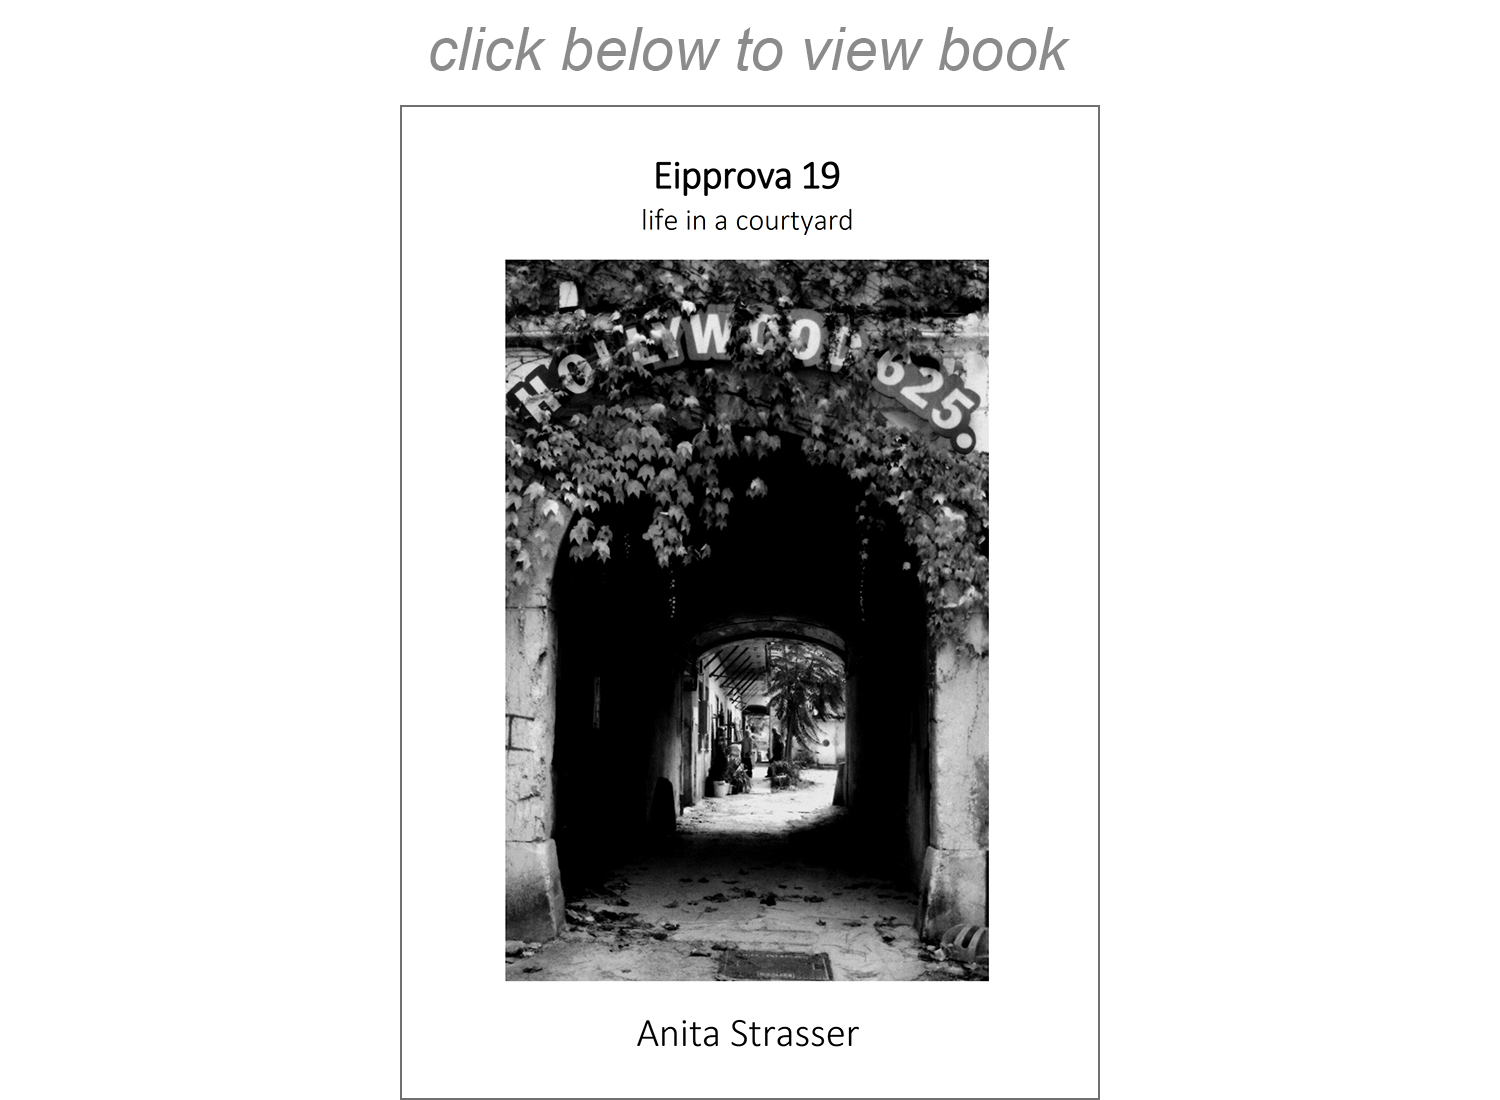 Eipprova 19 - book